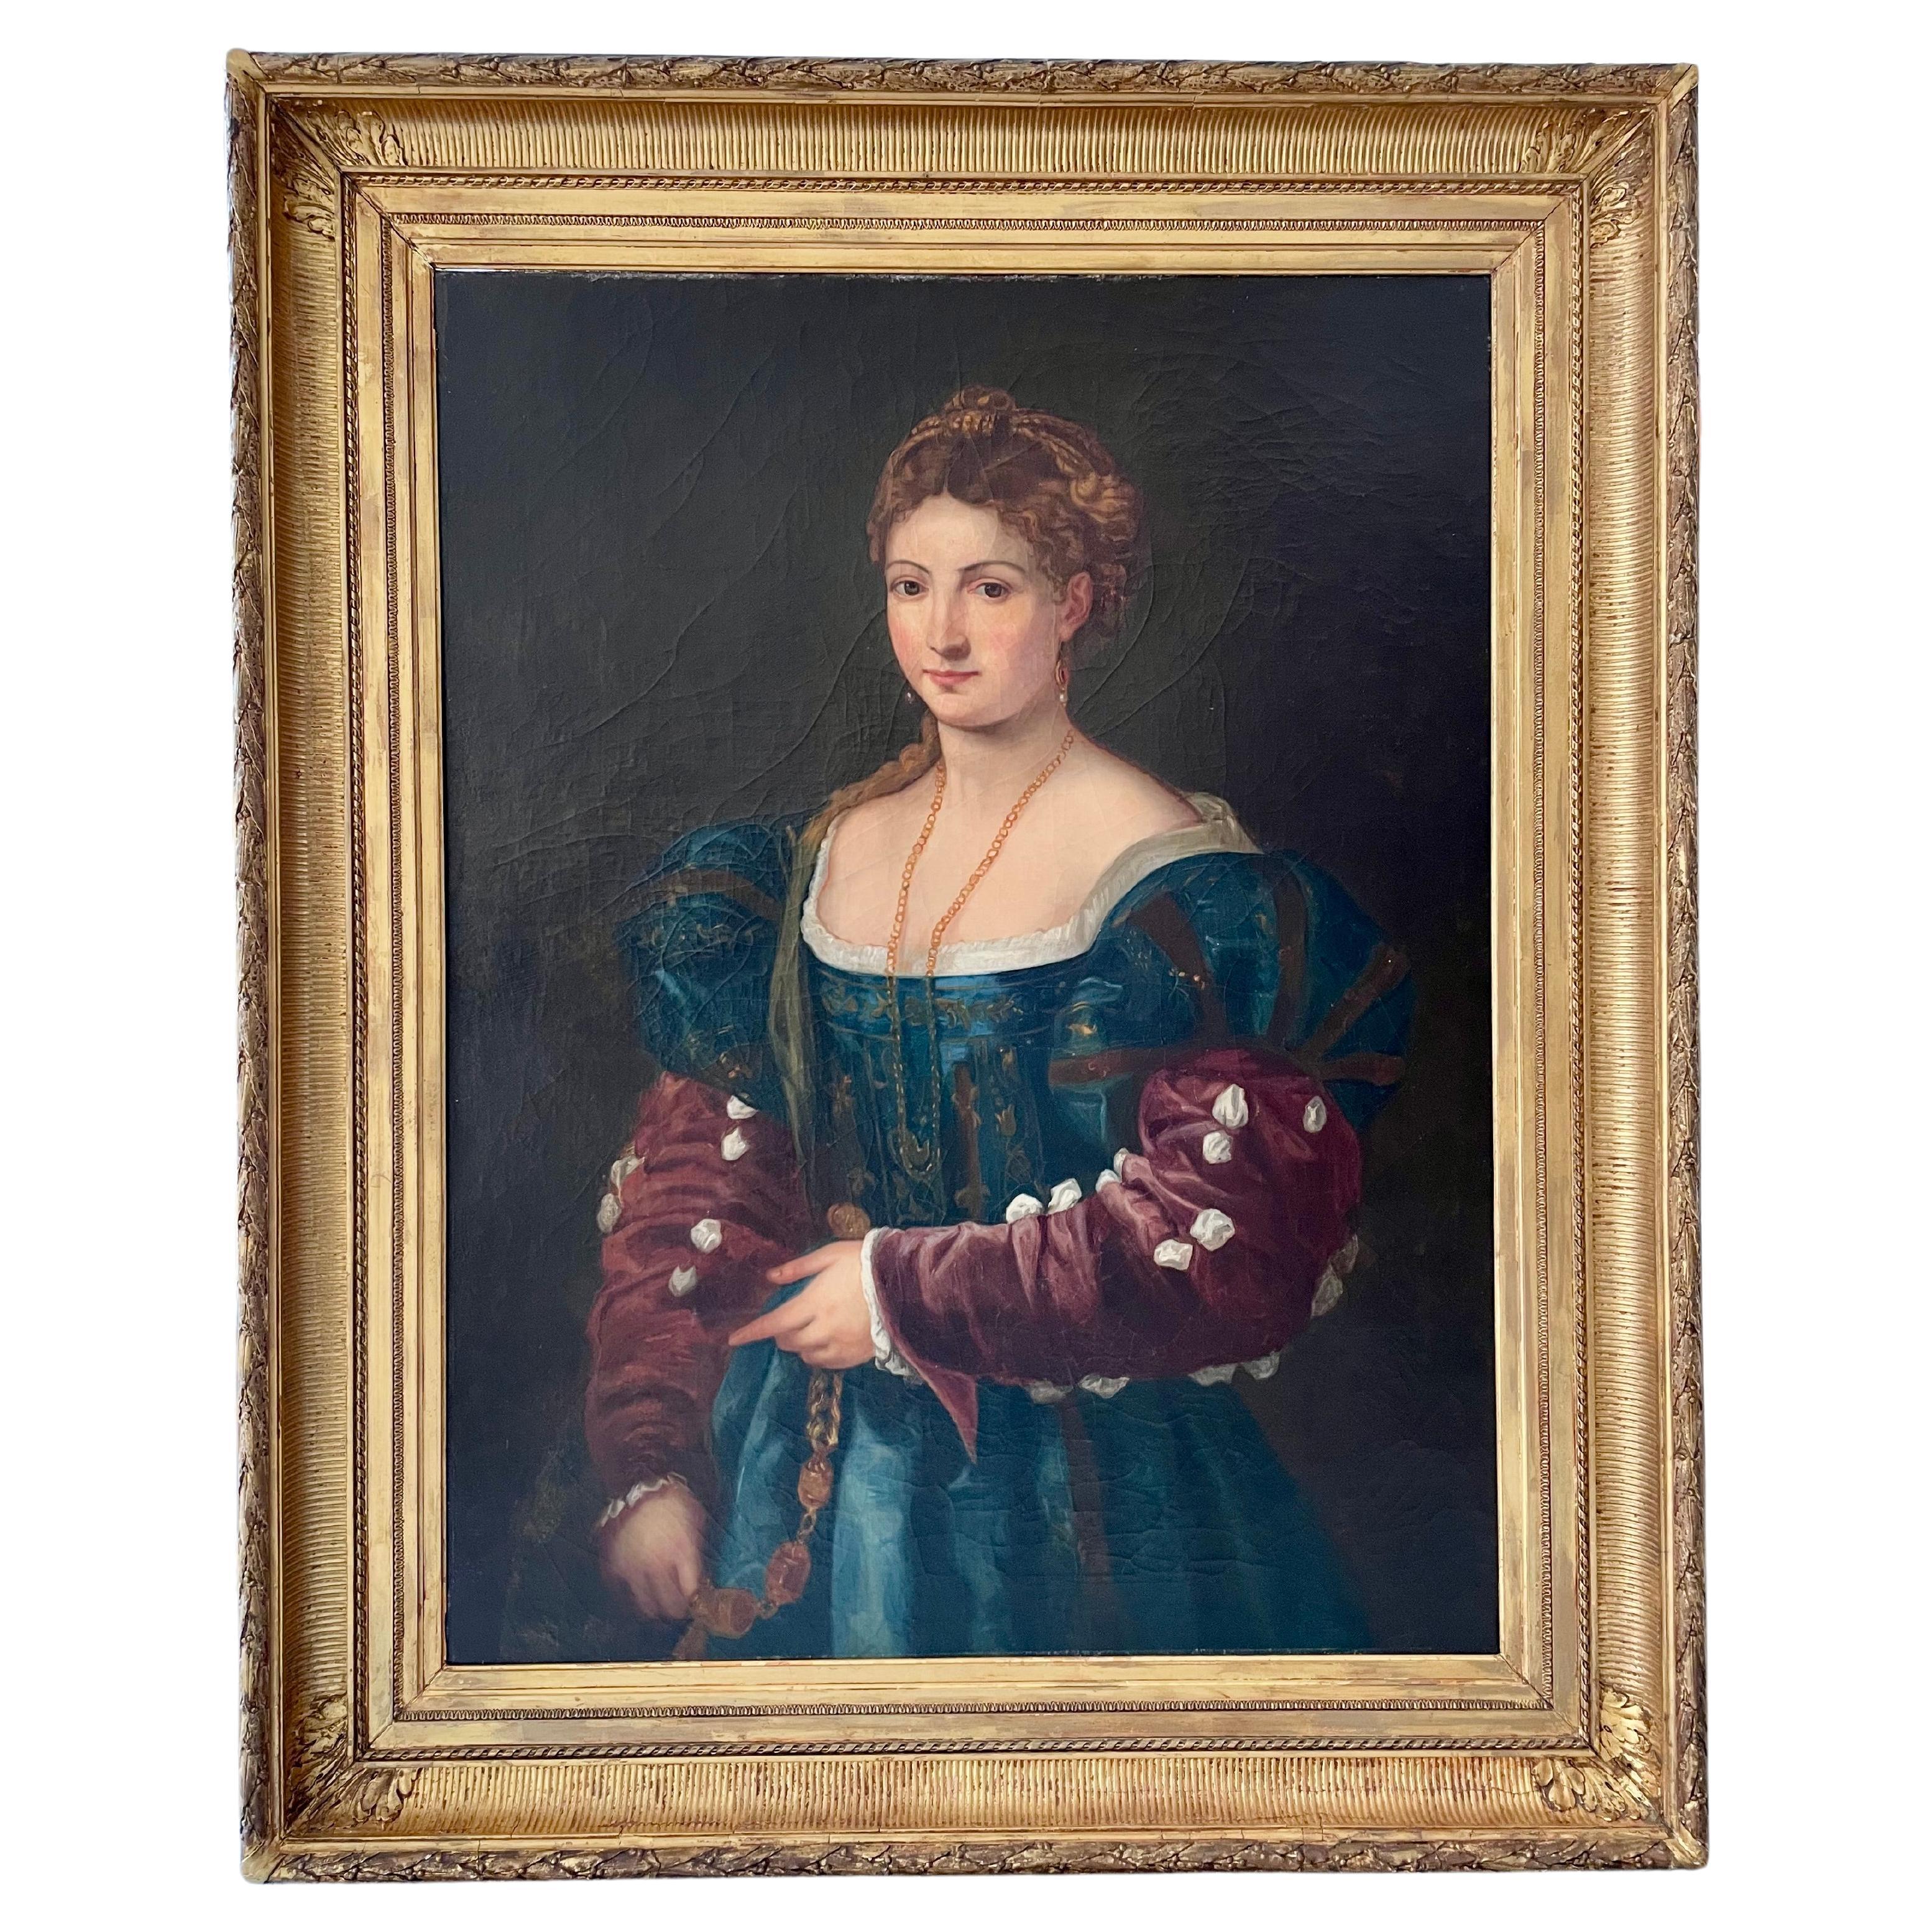 19th Century Italian Painting After Titian "La Bella"